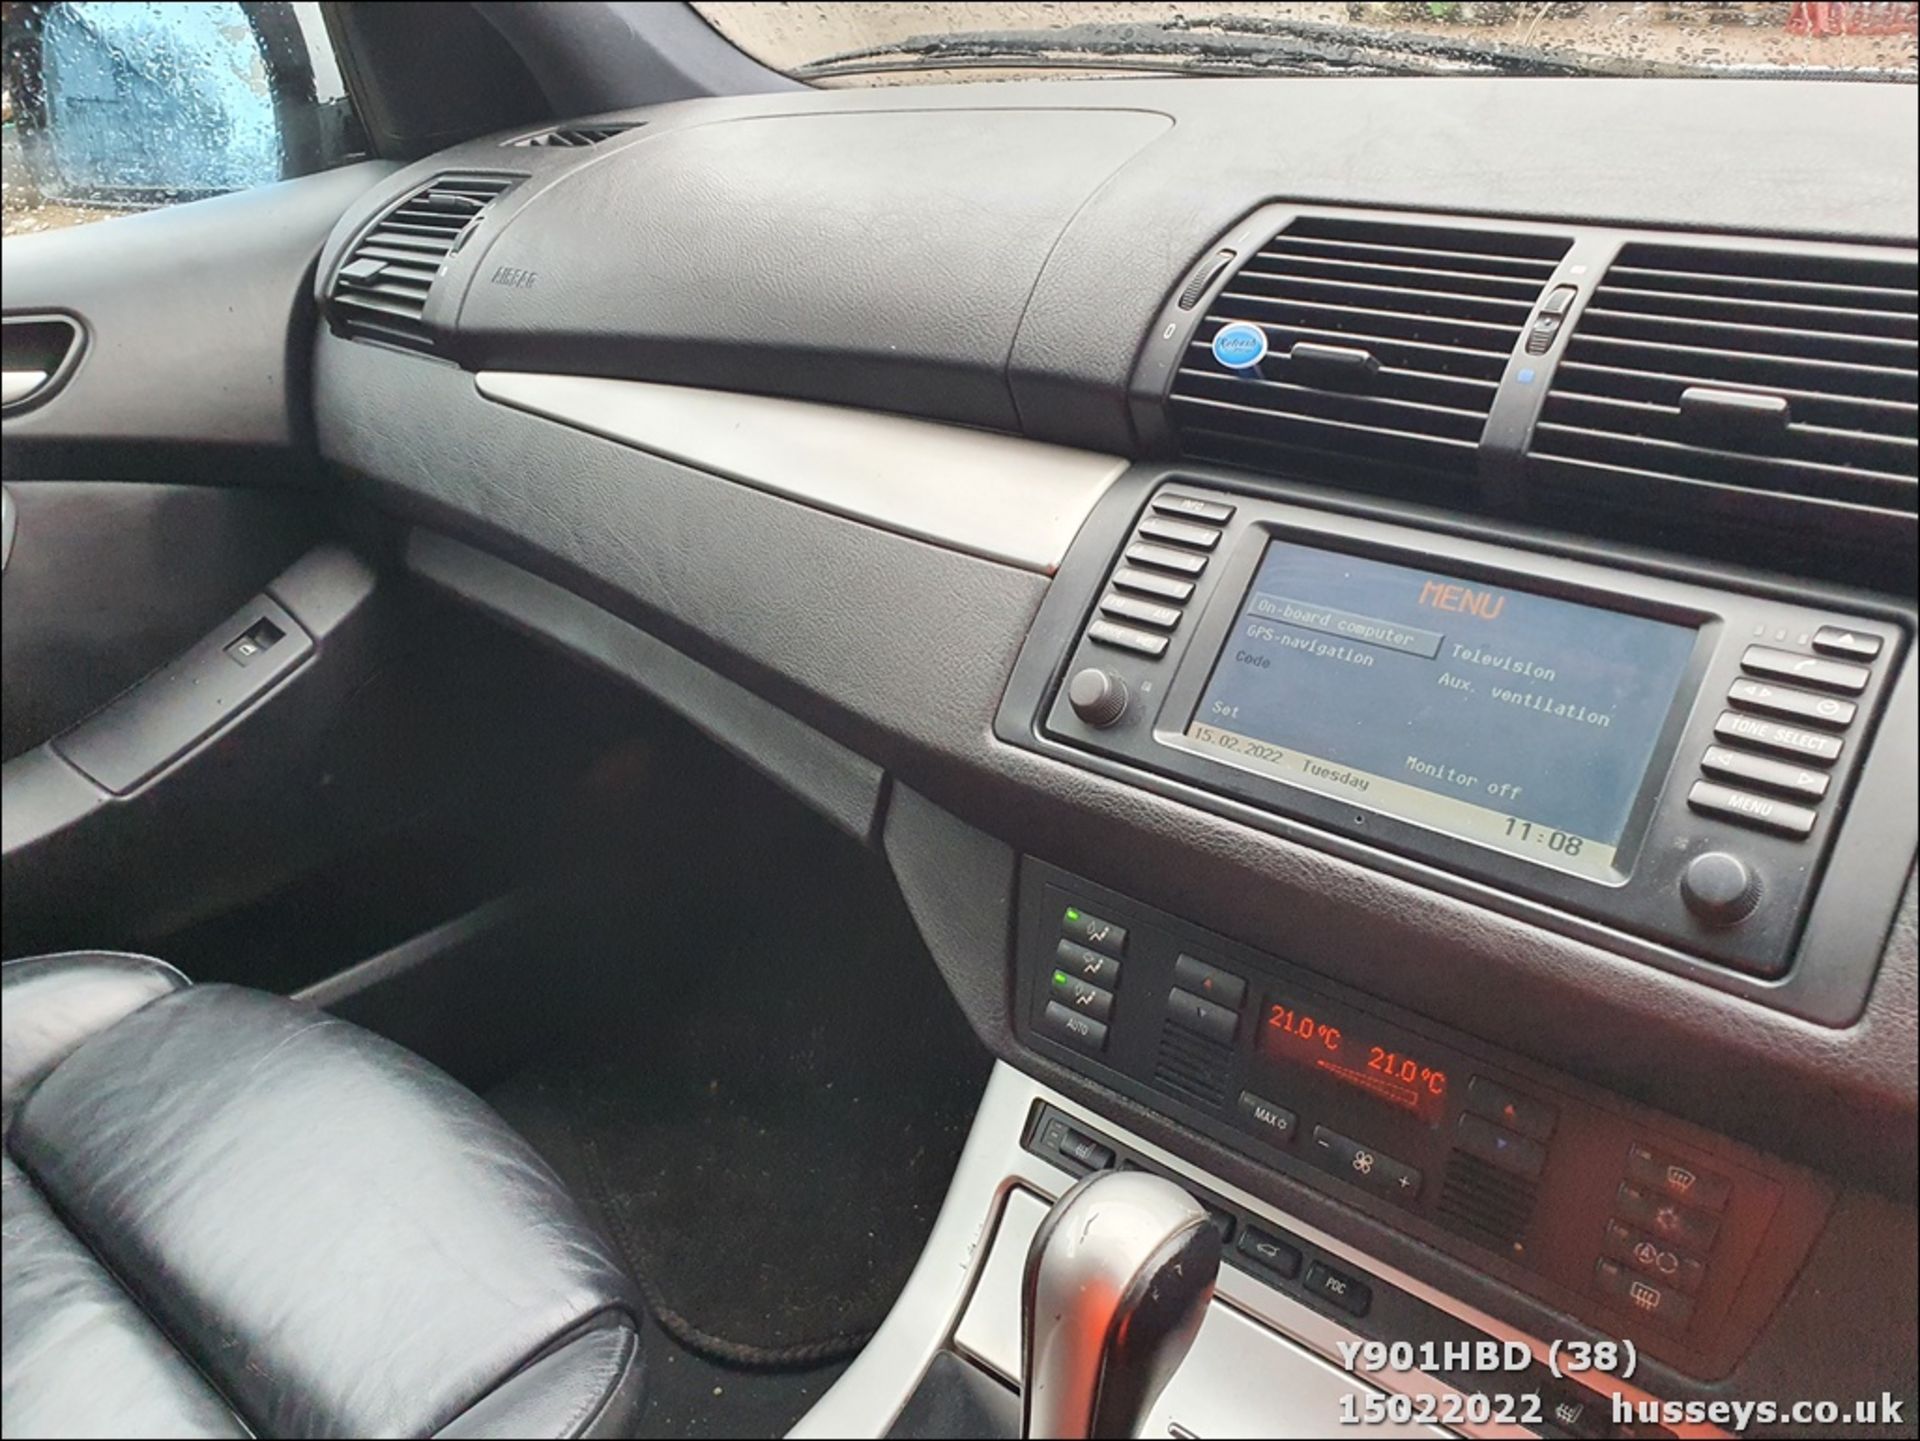 2001 BMW X5 SPORT AUTO - 2979cc 5dr Estate (Silver, 119k) - Image 24 of 41